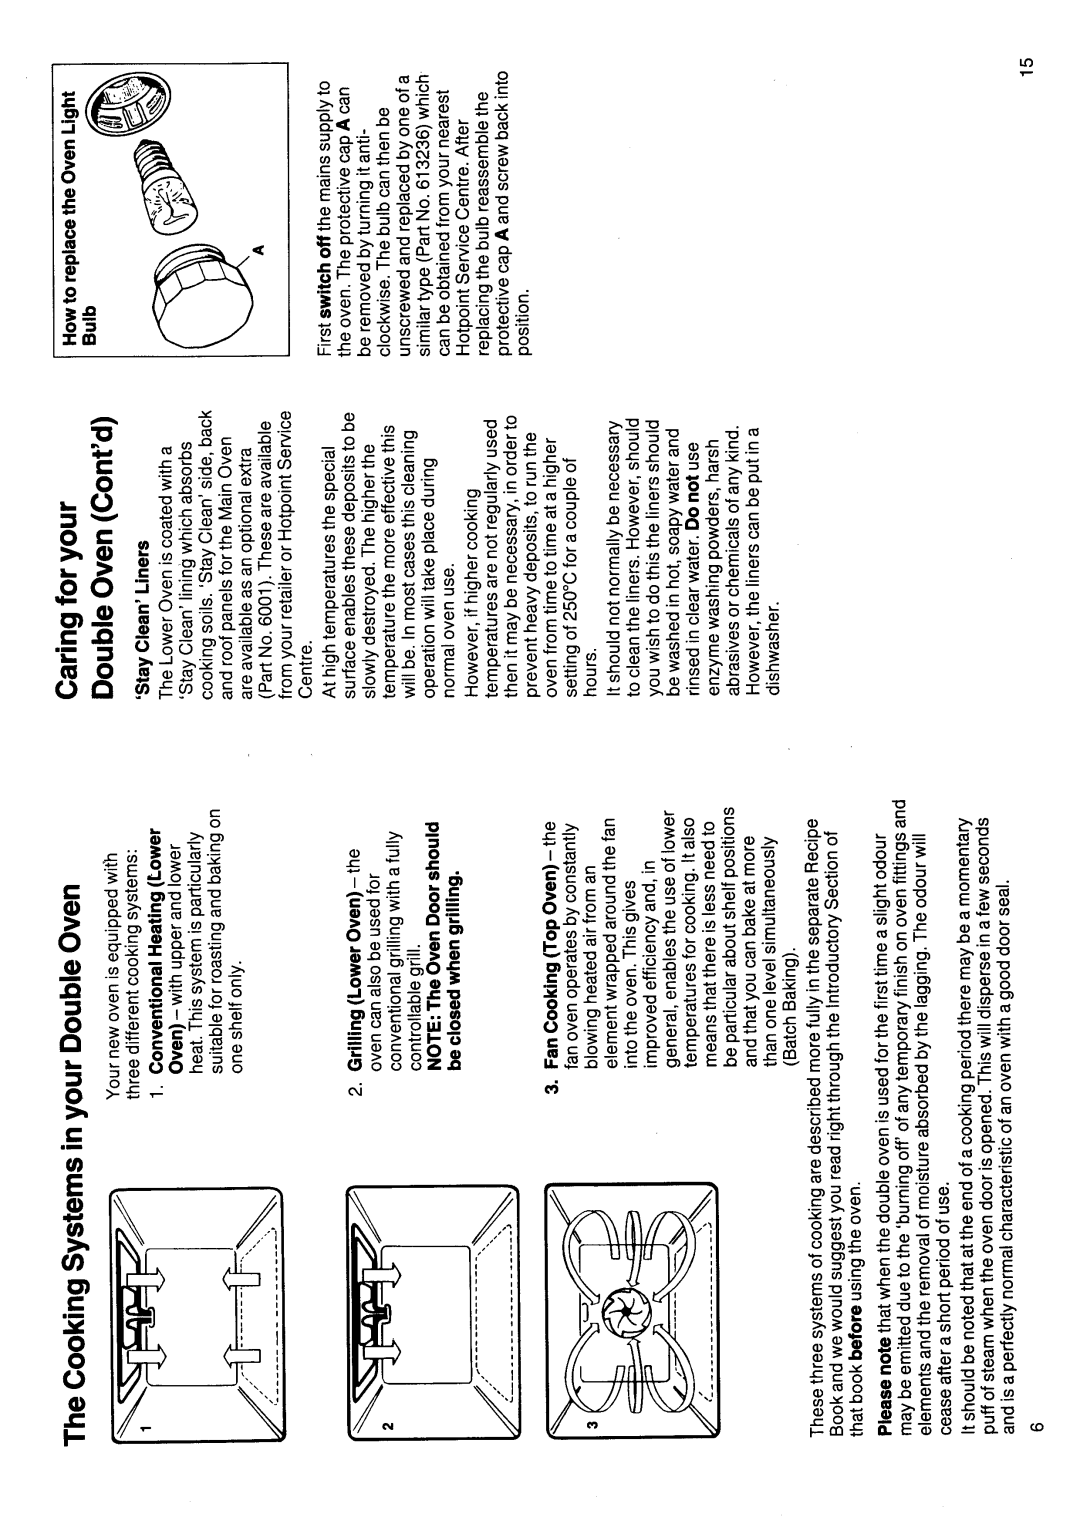 Hotpoint 6161 manual 